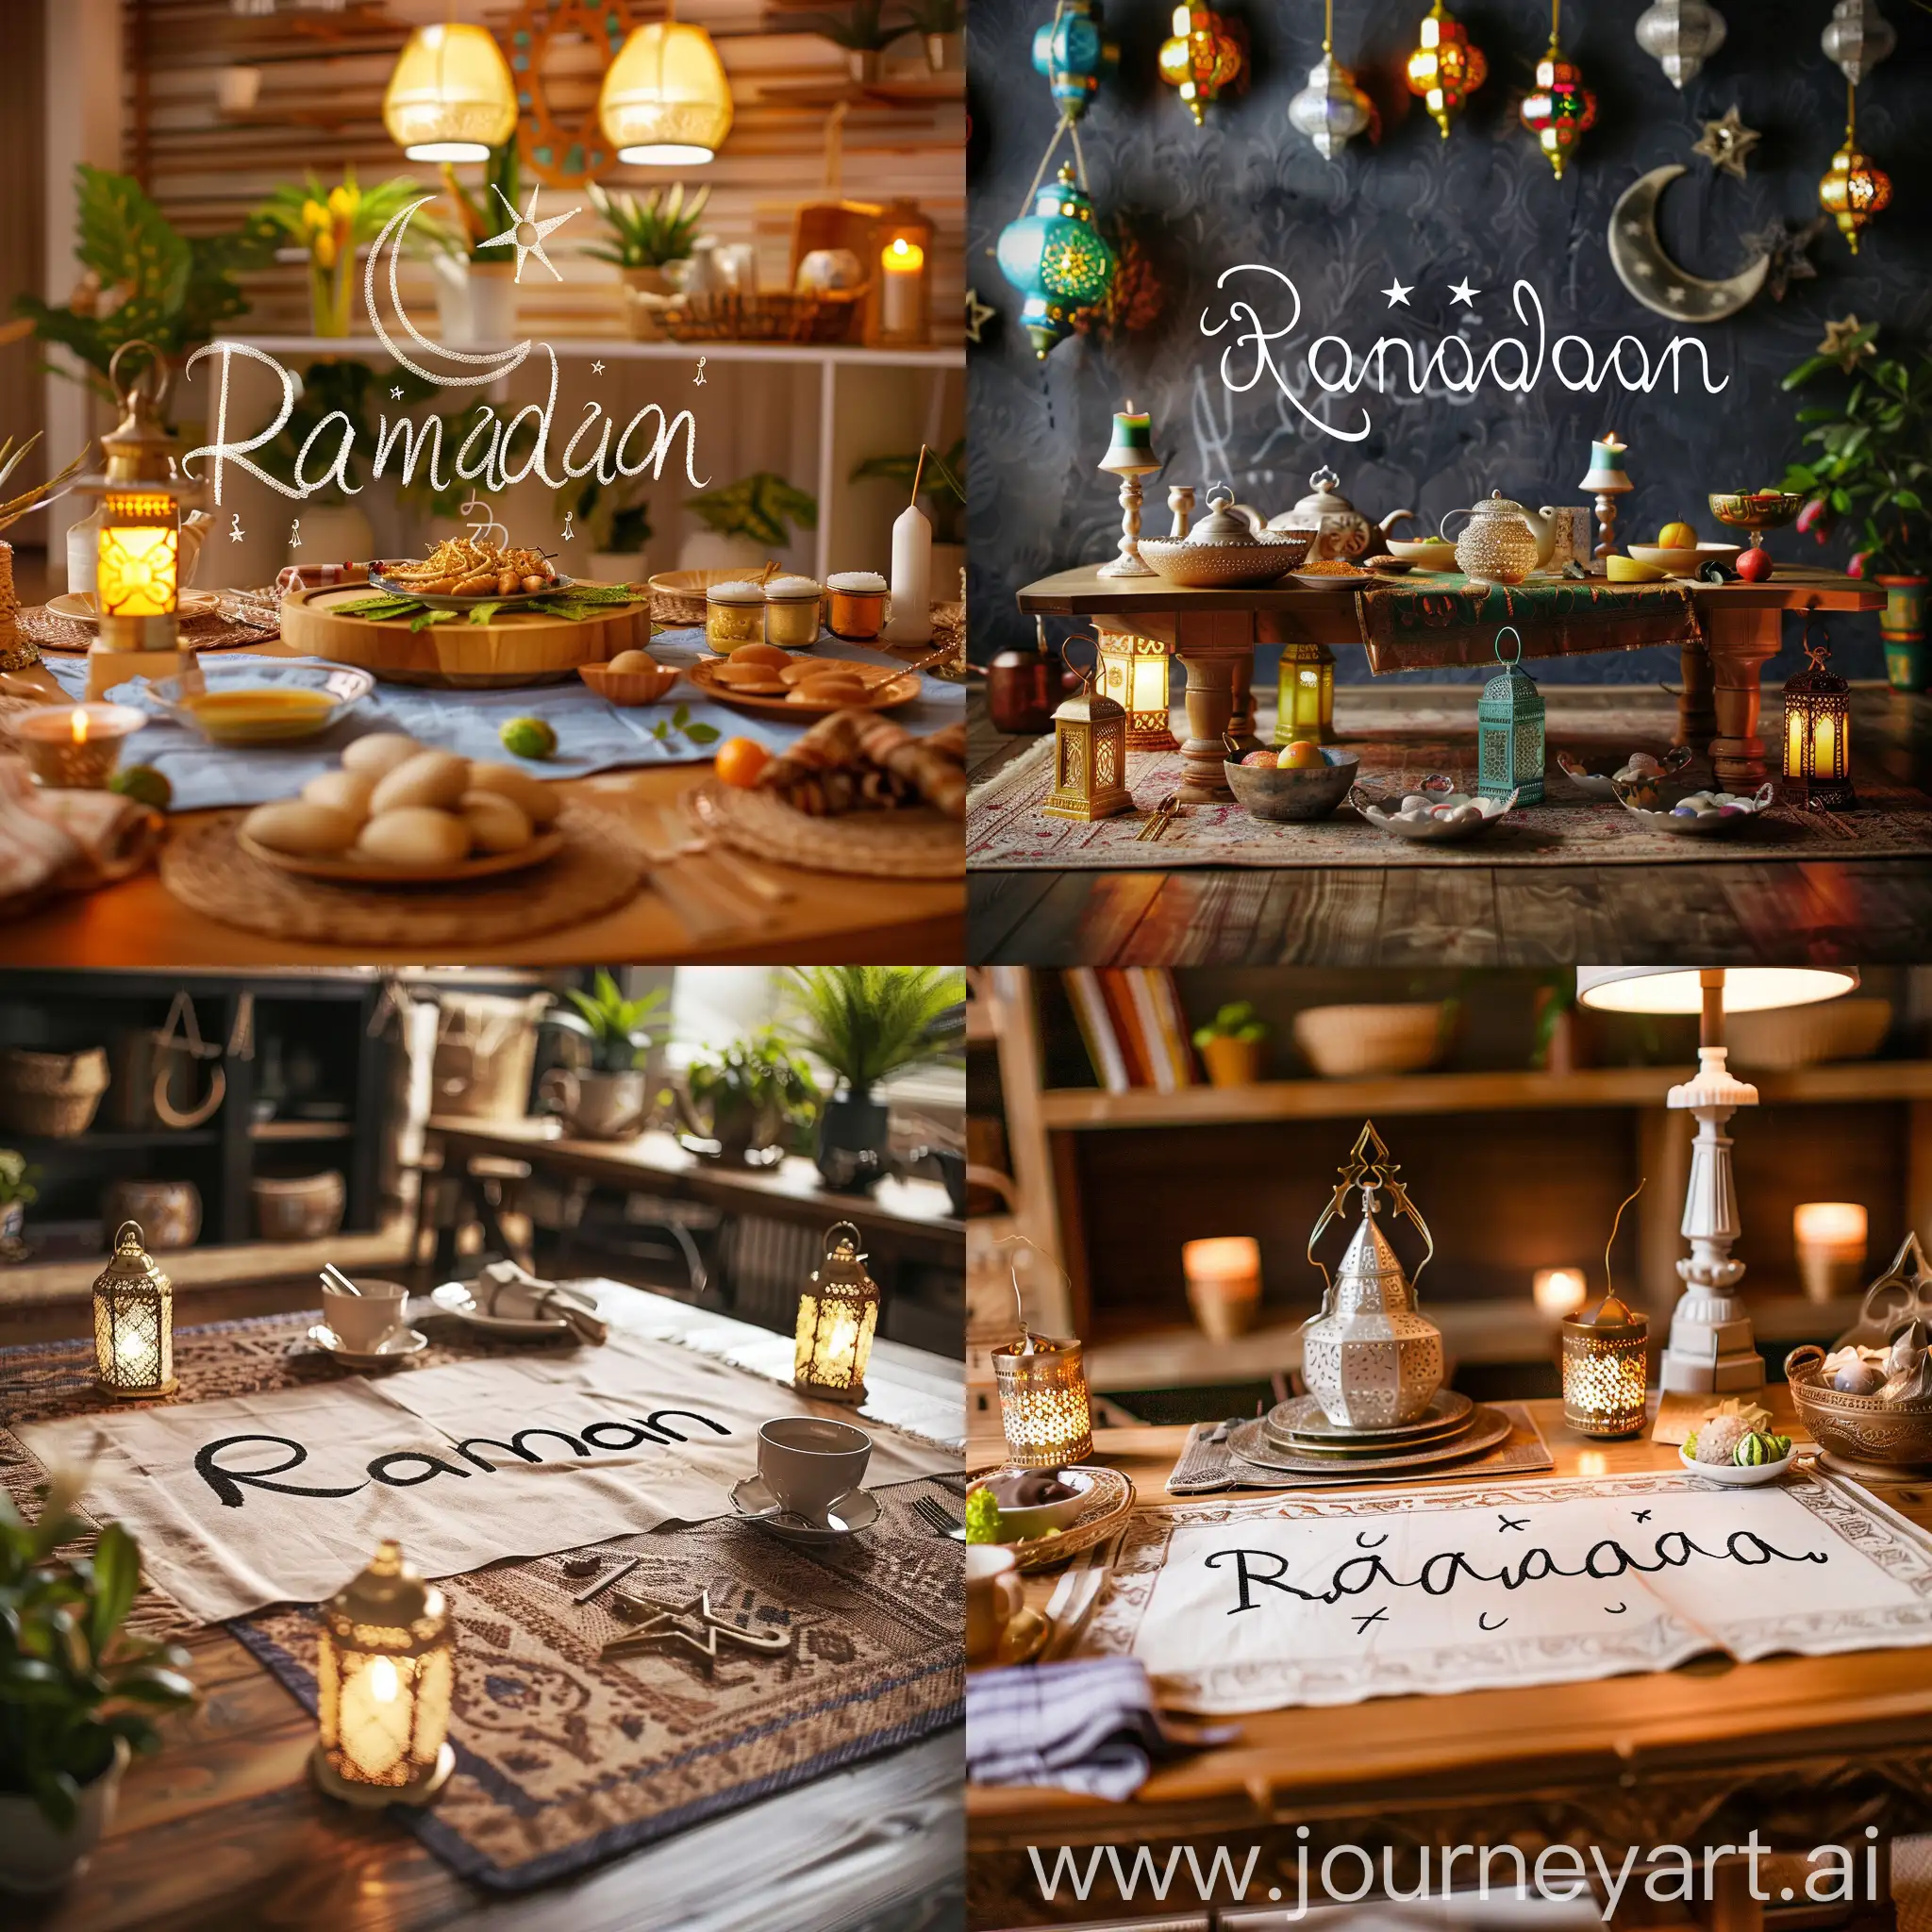 Ramadan-Atmosphere-Dining-Table-Decorated-with-Ramadan-Symbols